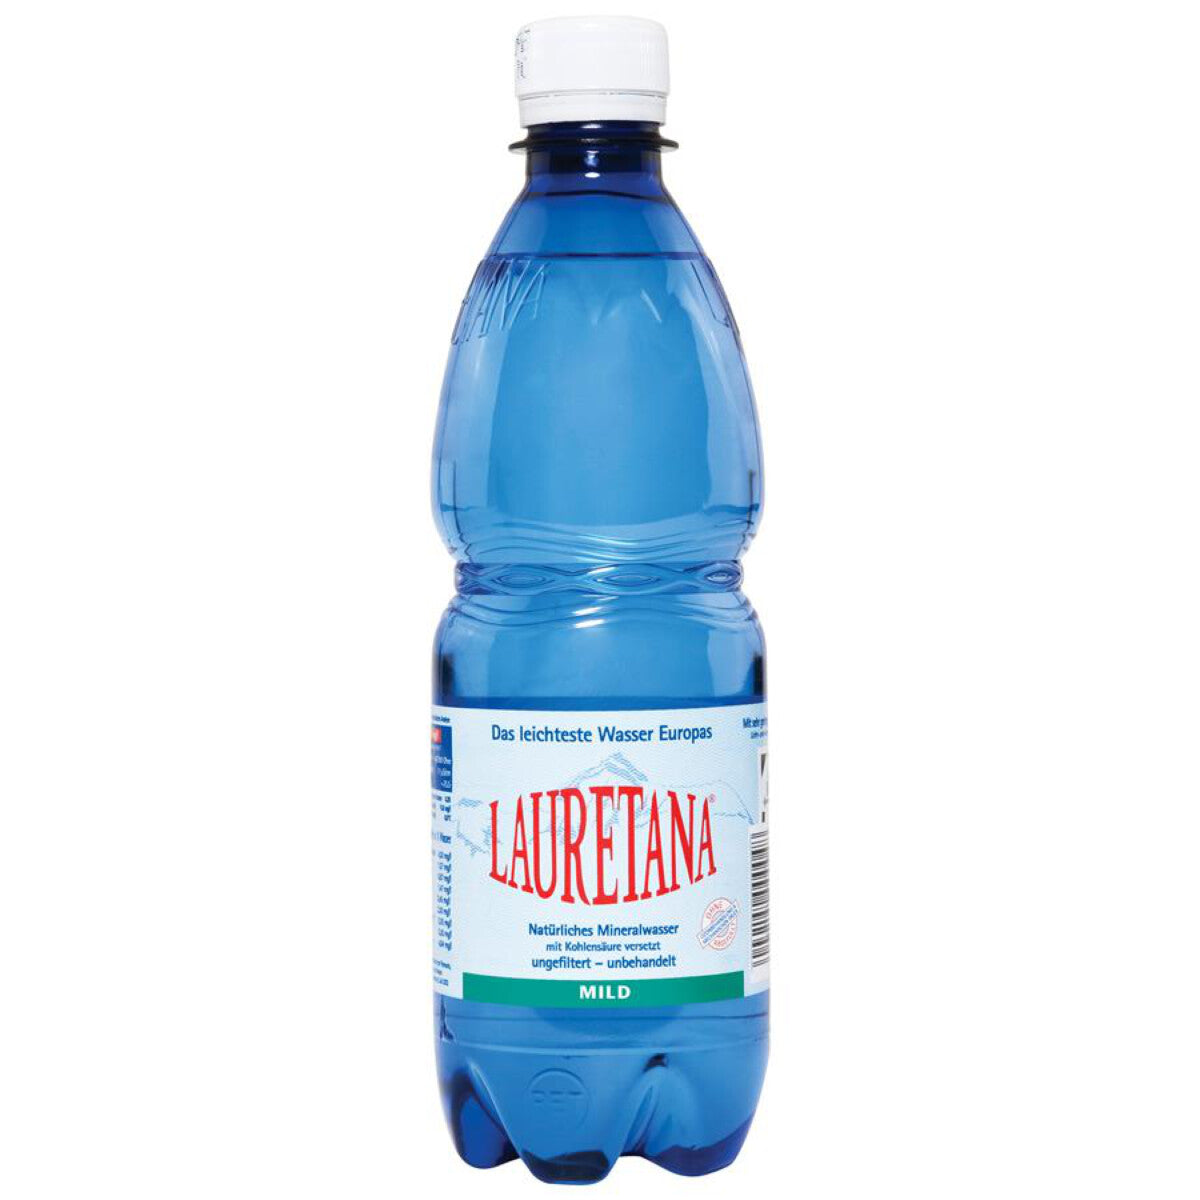 LAURETANA Mineralwasser mild - 0,5 l